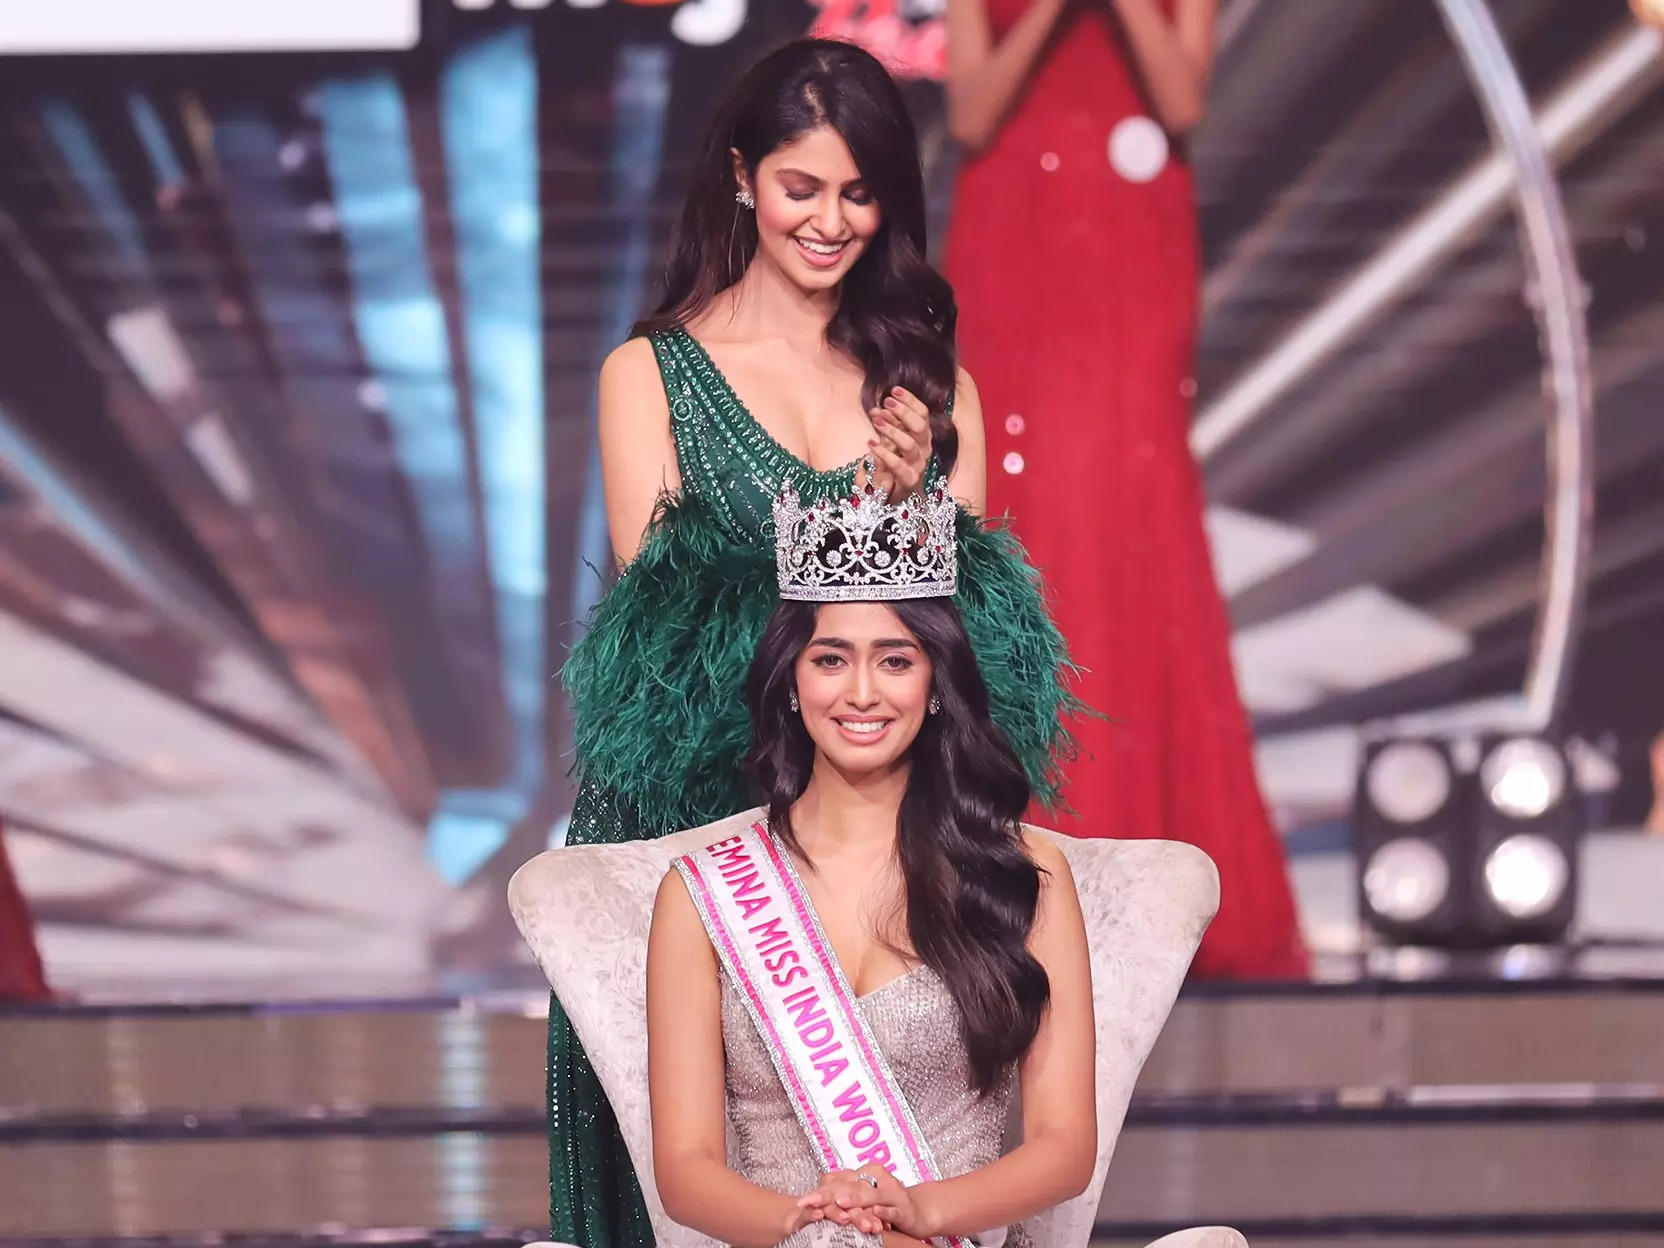 Drum rolls!! Karnataka’s Sini Shetty gets crowned as Femina Miss India World 2022!